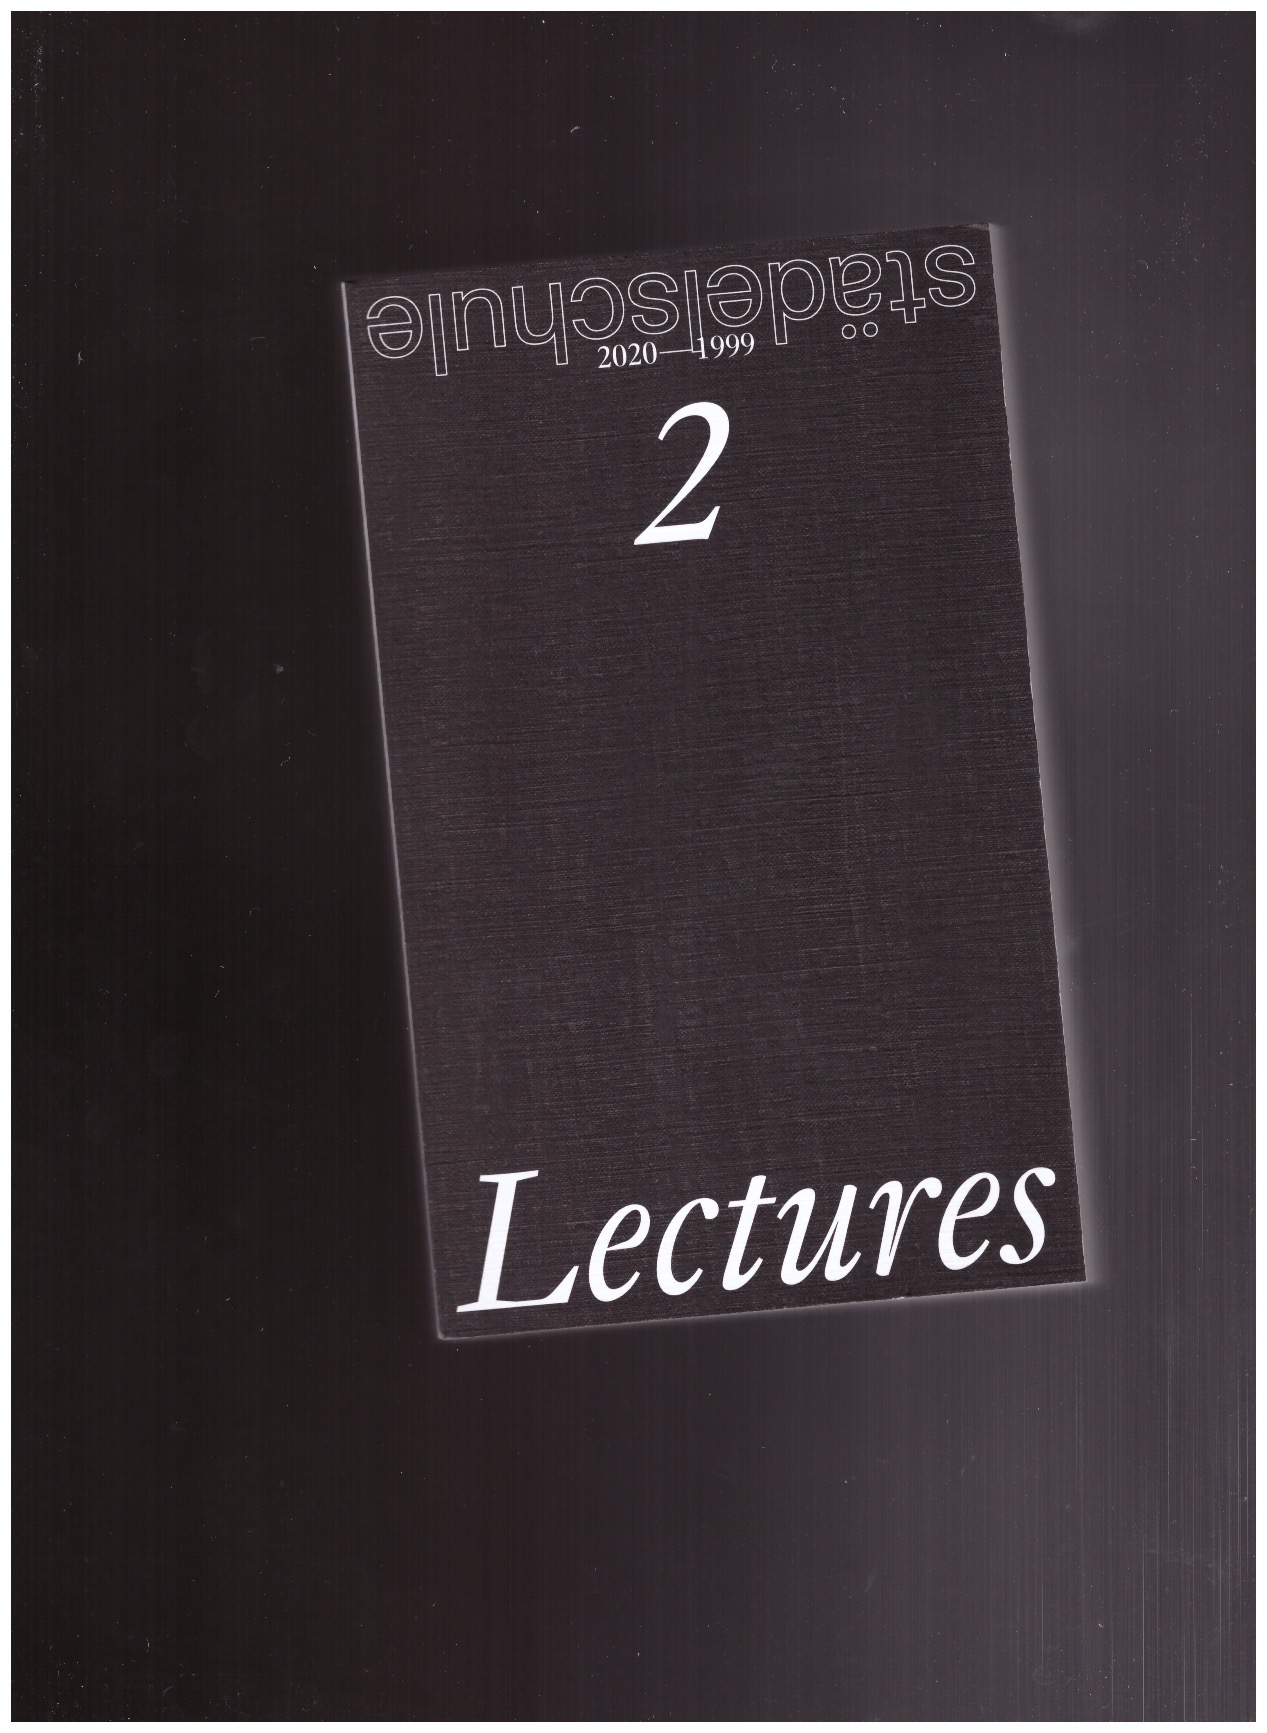 BIER, Arielle; KOMOSS, Paula; PIROTTE, Philippe (eds.) - Städelschule Lectures 2